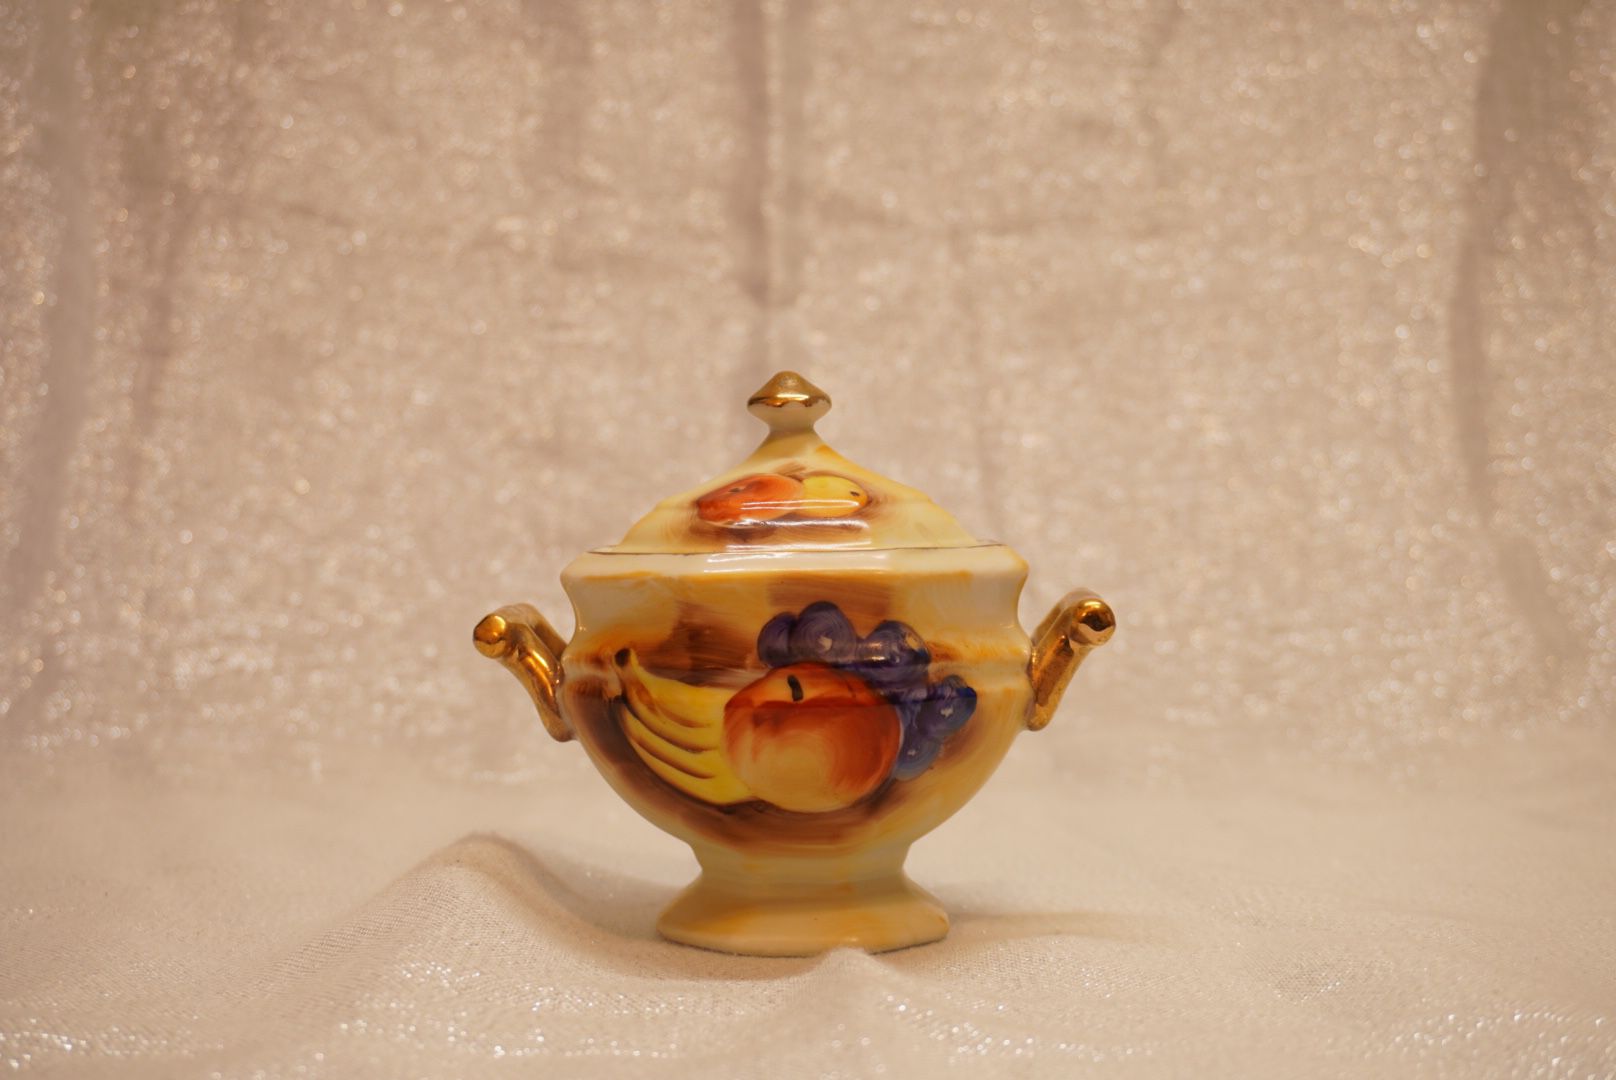 Vintage Enesco Sugar Condiment Bowl with Lid and Handpainted Fruit Design, Japan